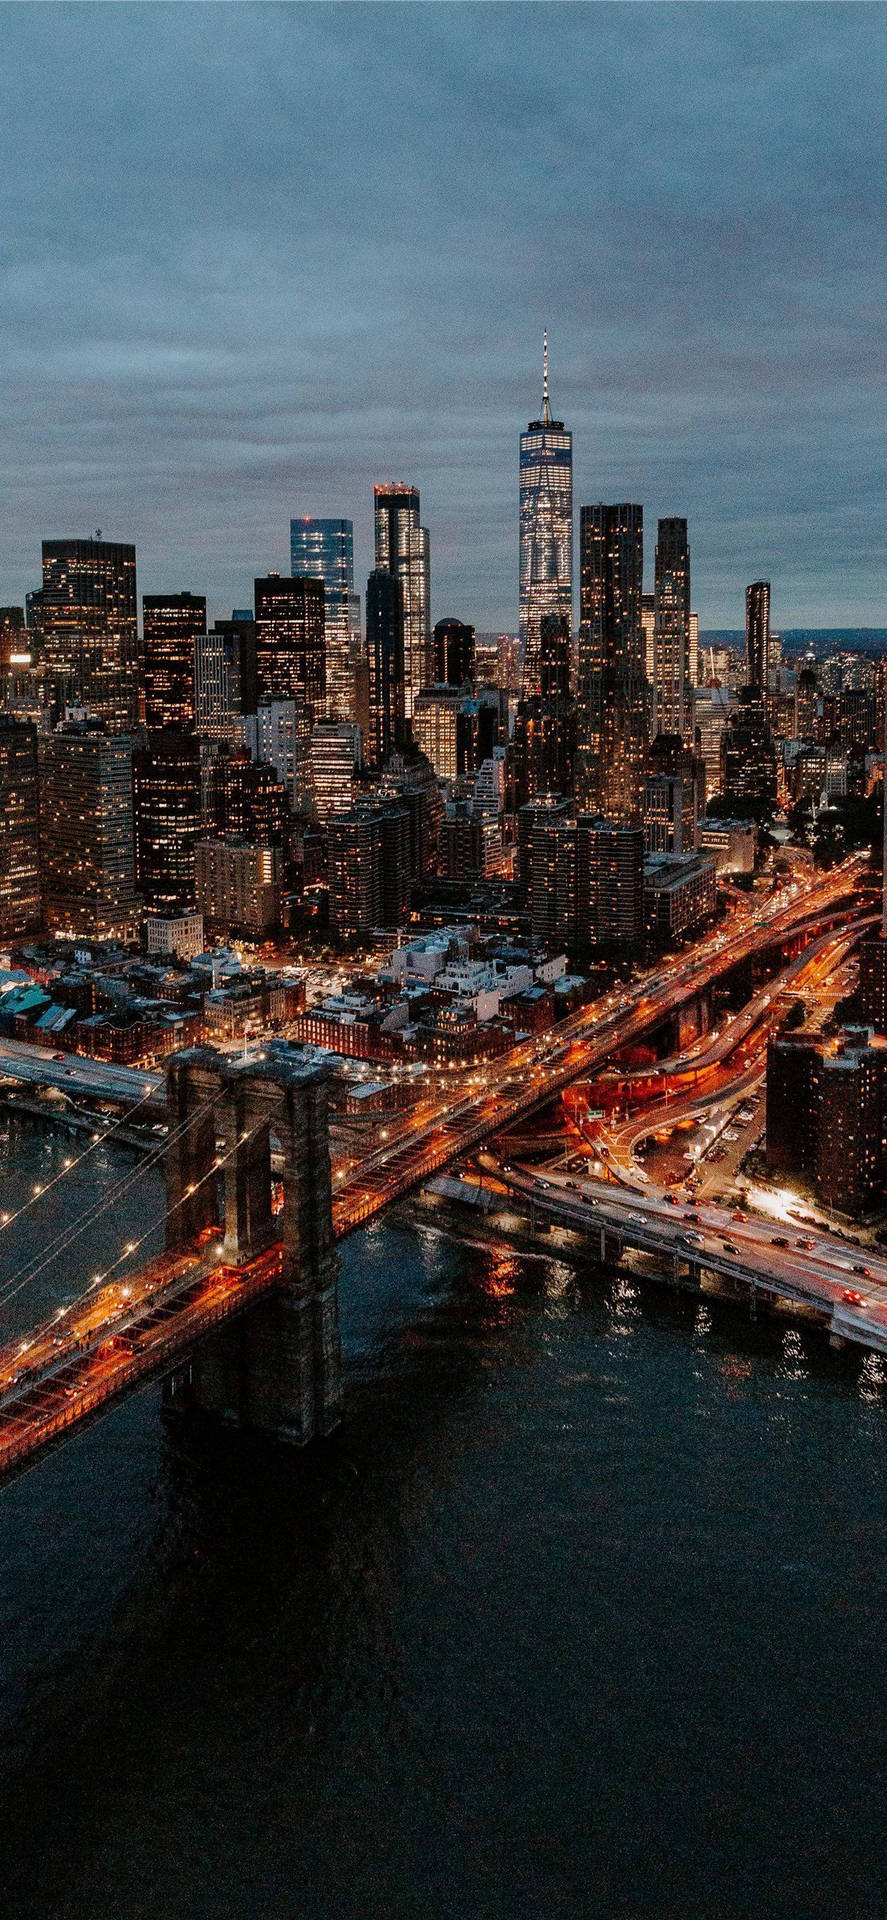 Download City Night iPhone Aesthetic Wallpaper